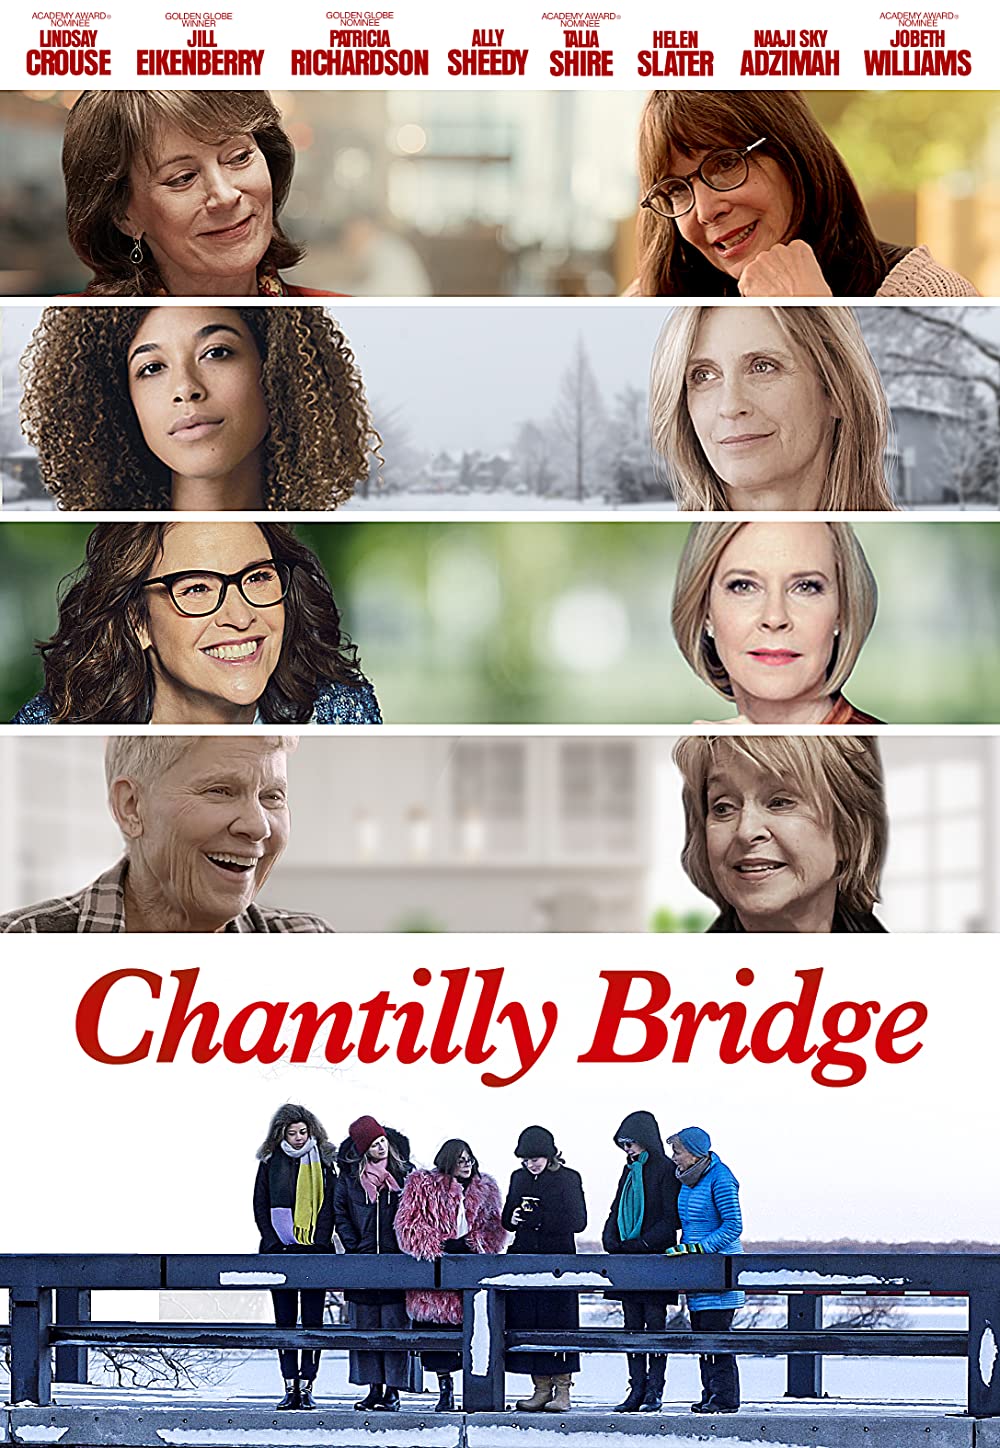 Chantilly Bridge Movie 2023, Official Trailer, Release Date